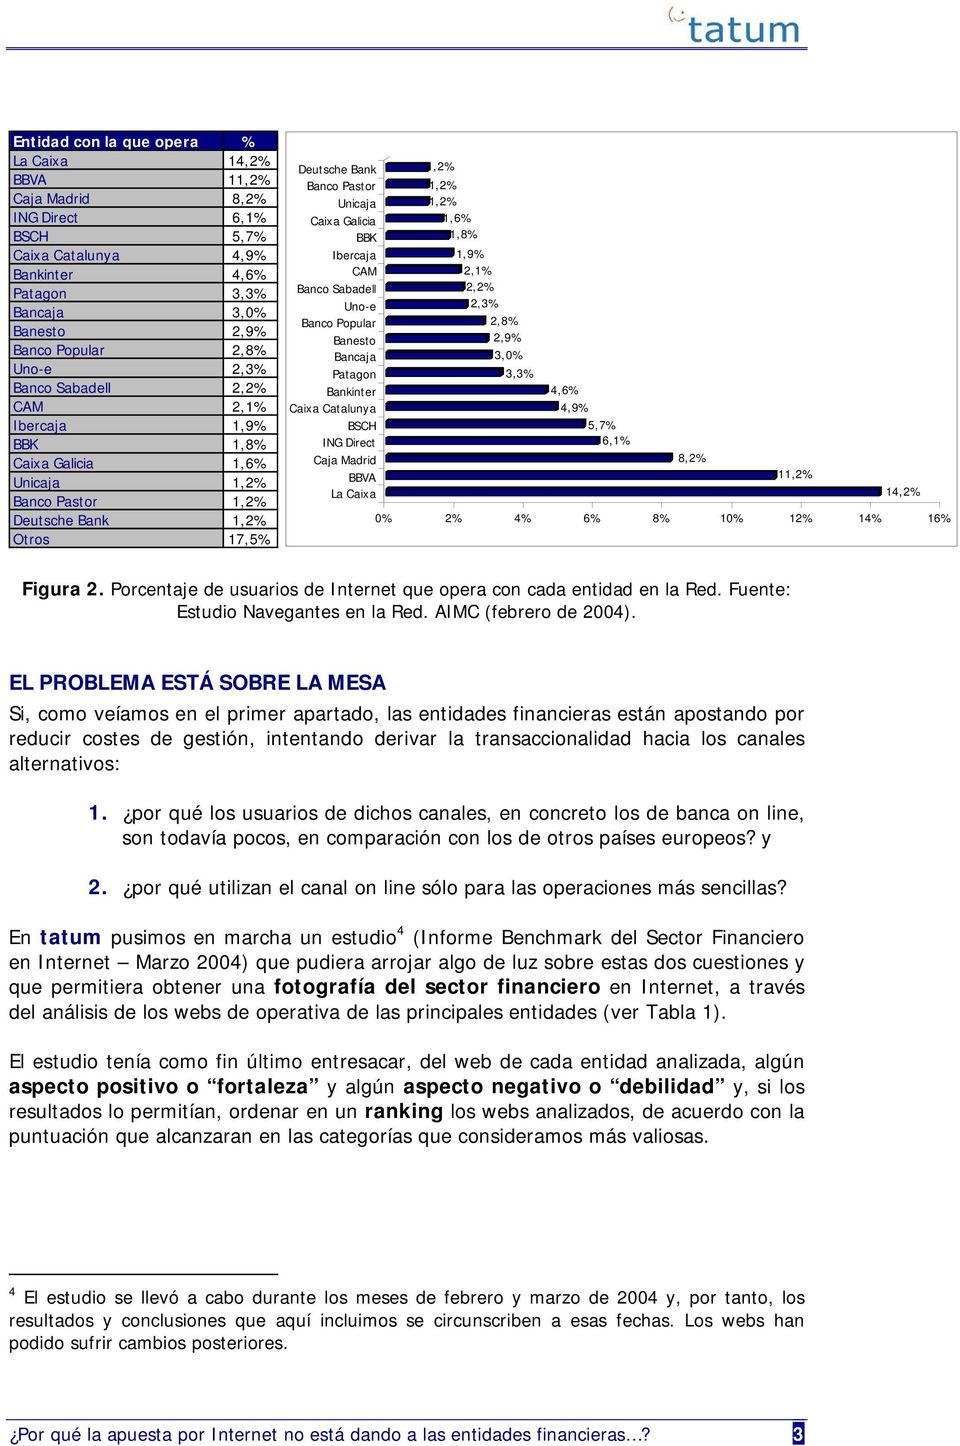 Uno-e Banco Popular Banesto Bancaja Patagon Bankinter Caixa Catalunya BSCH ING Direct Caja Madrid BBVA La Caixa,2%,2%,2%,6%,8%,9% 2,% 2,2% 2,3% 2,8% 2,9% 3,0% 3,3% 4,6% 4,9% 5,7% 6,% 8,2%,2% 4,2% 0%